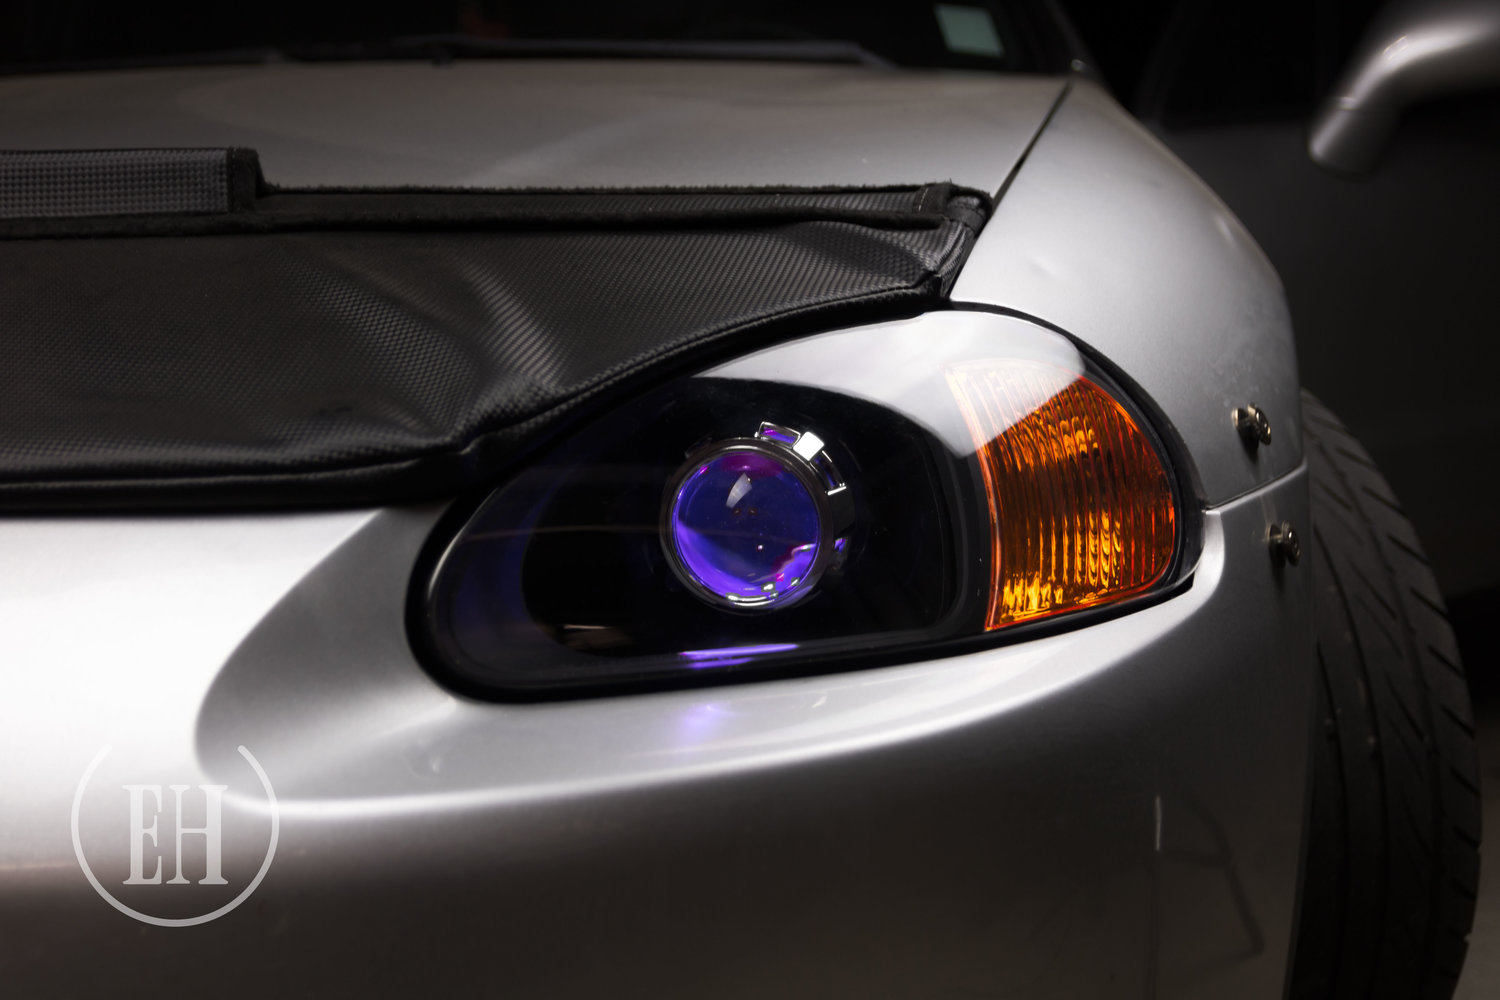 Honda Civic Del Sol 10 05 Evil Headlights Custom Retrofitting Service In Southern California